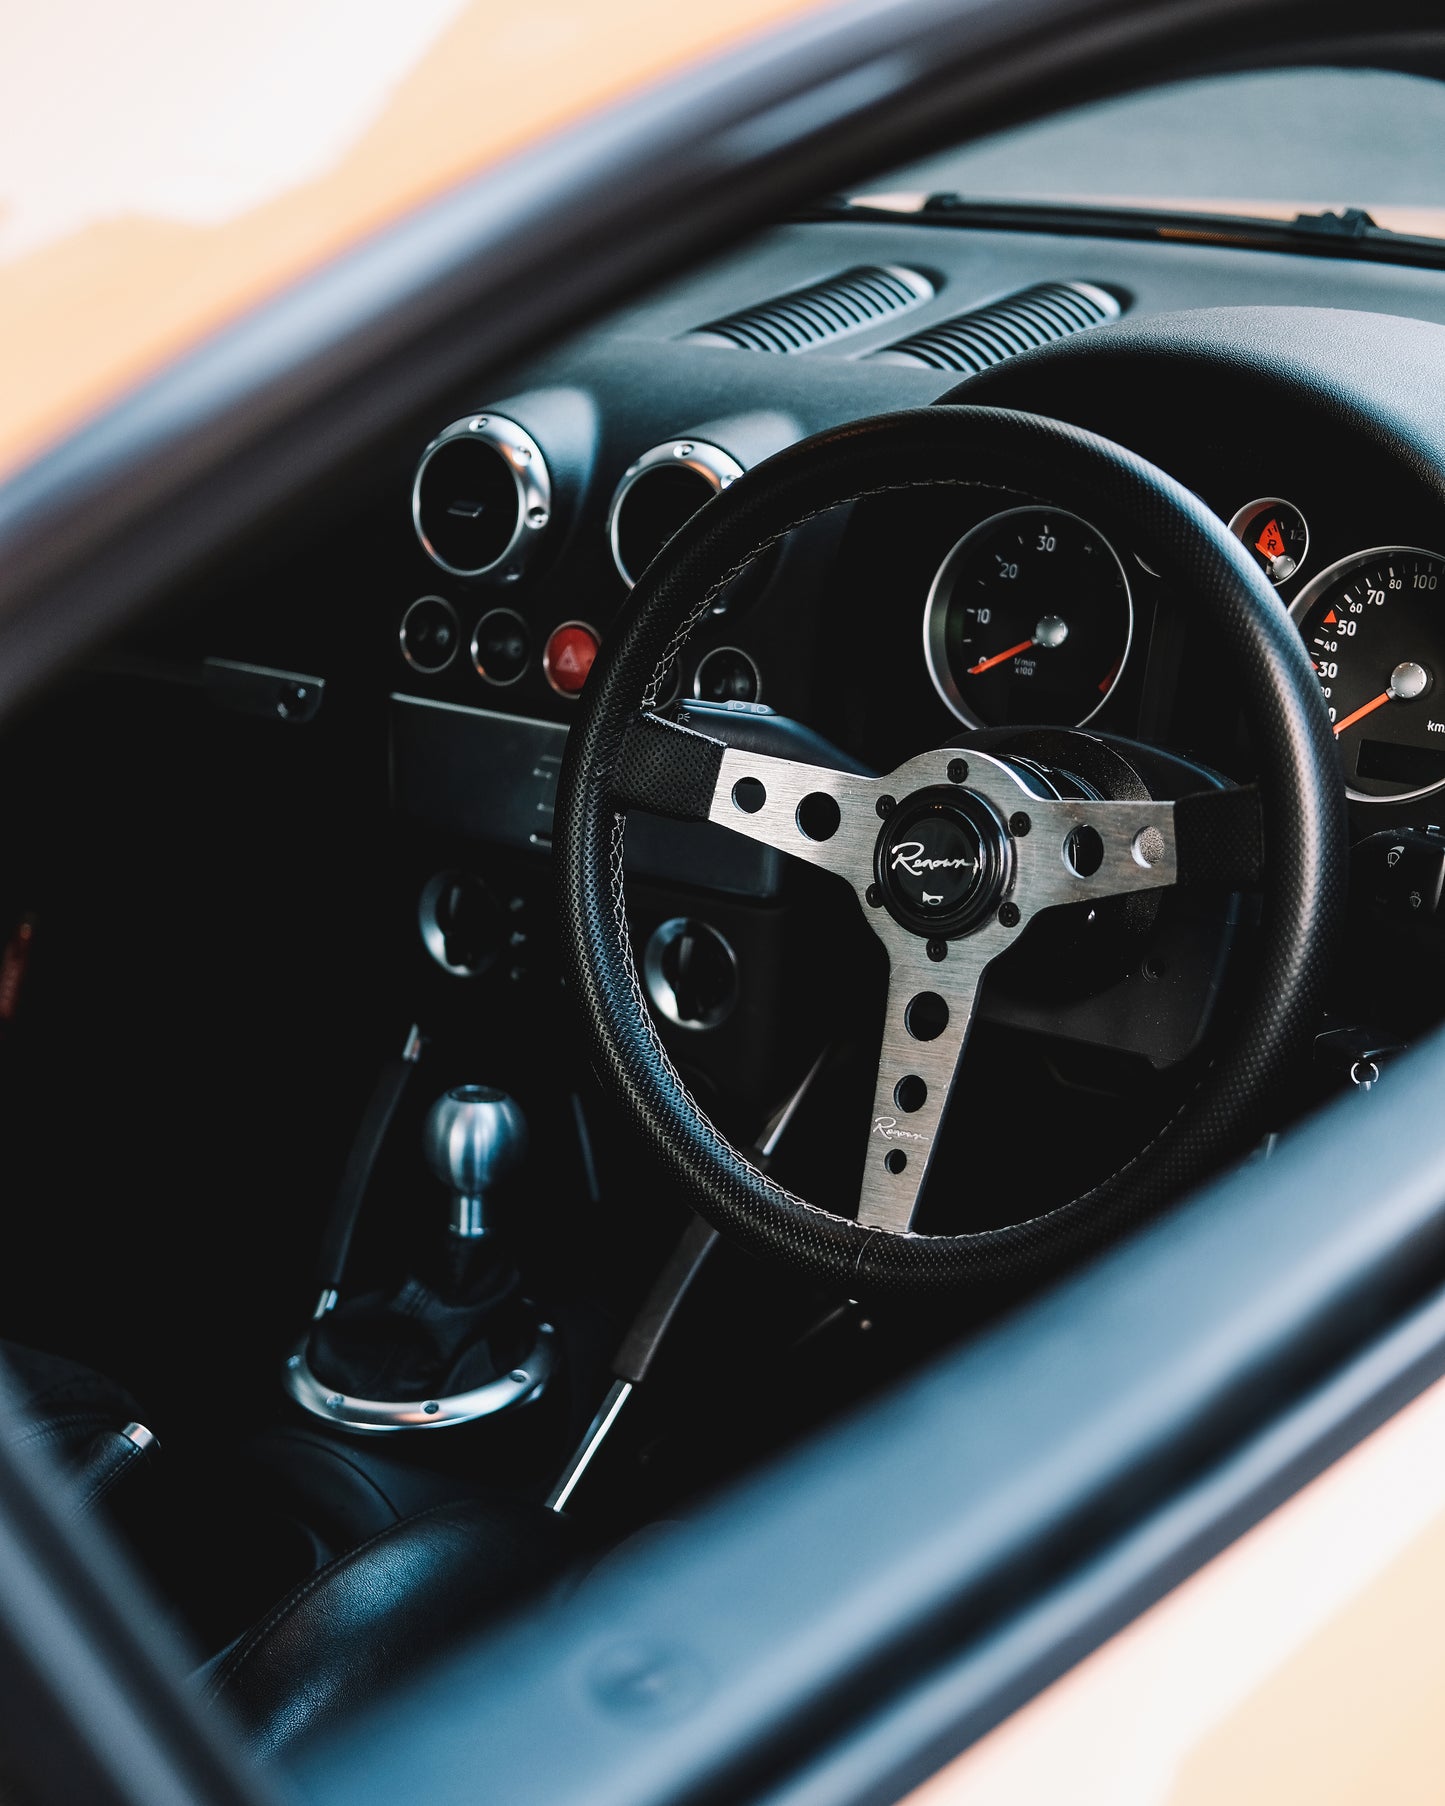 Renown Monaco Silver Steering Wheel